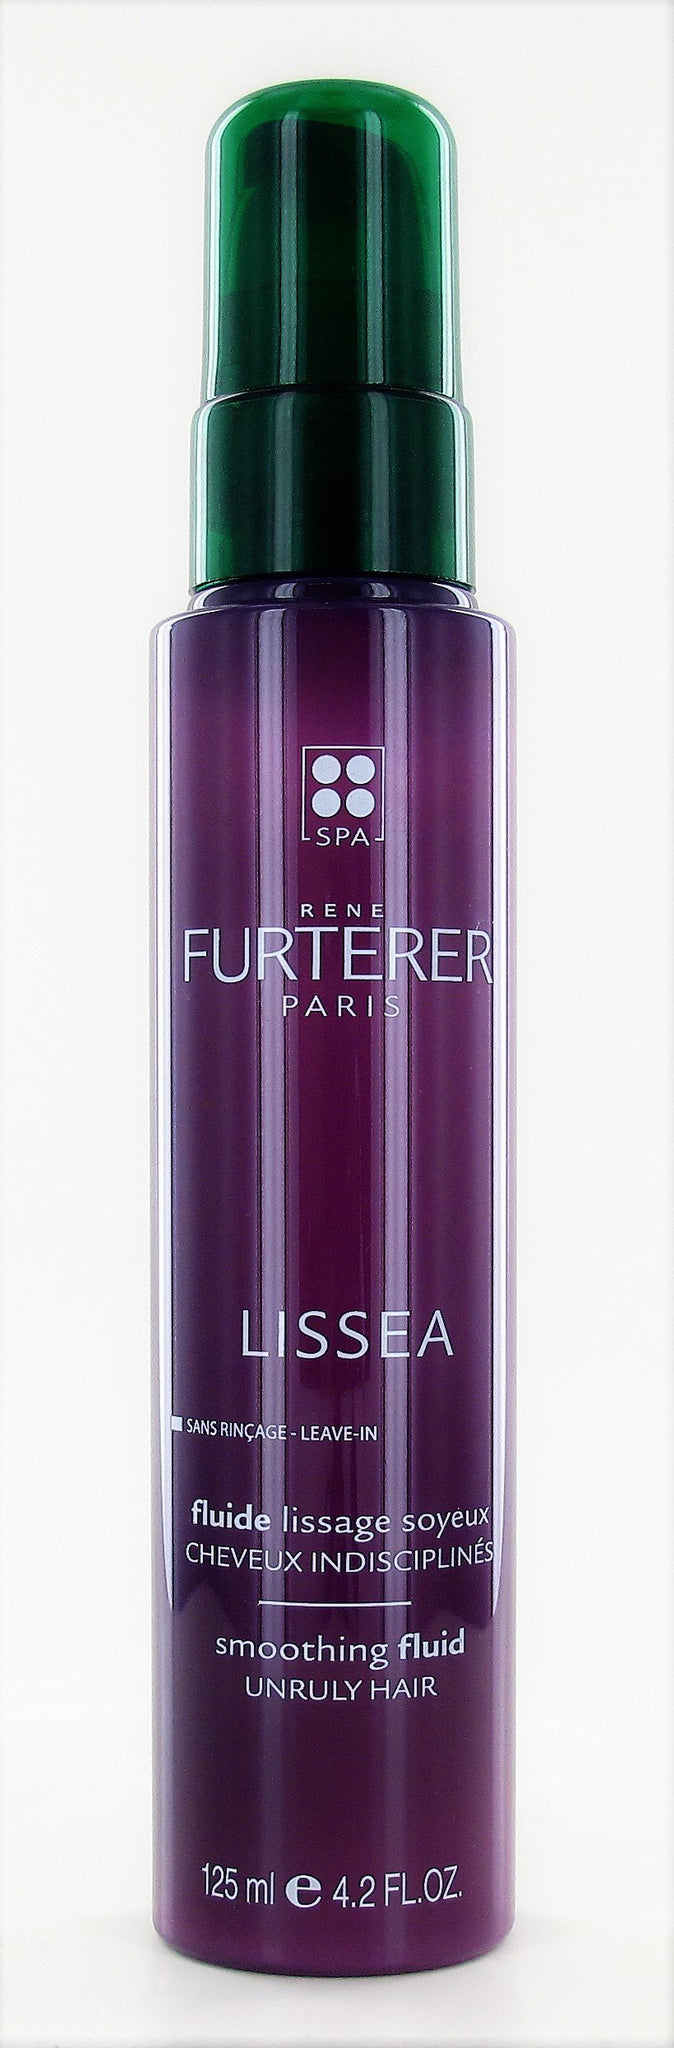 Rene Furterer LISSEA Leave-In Smoothing Fluid 4.22 oz